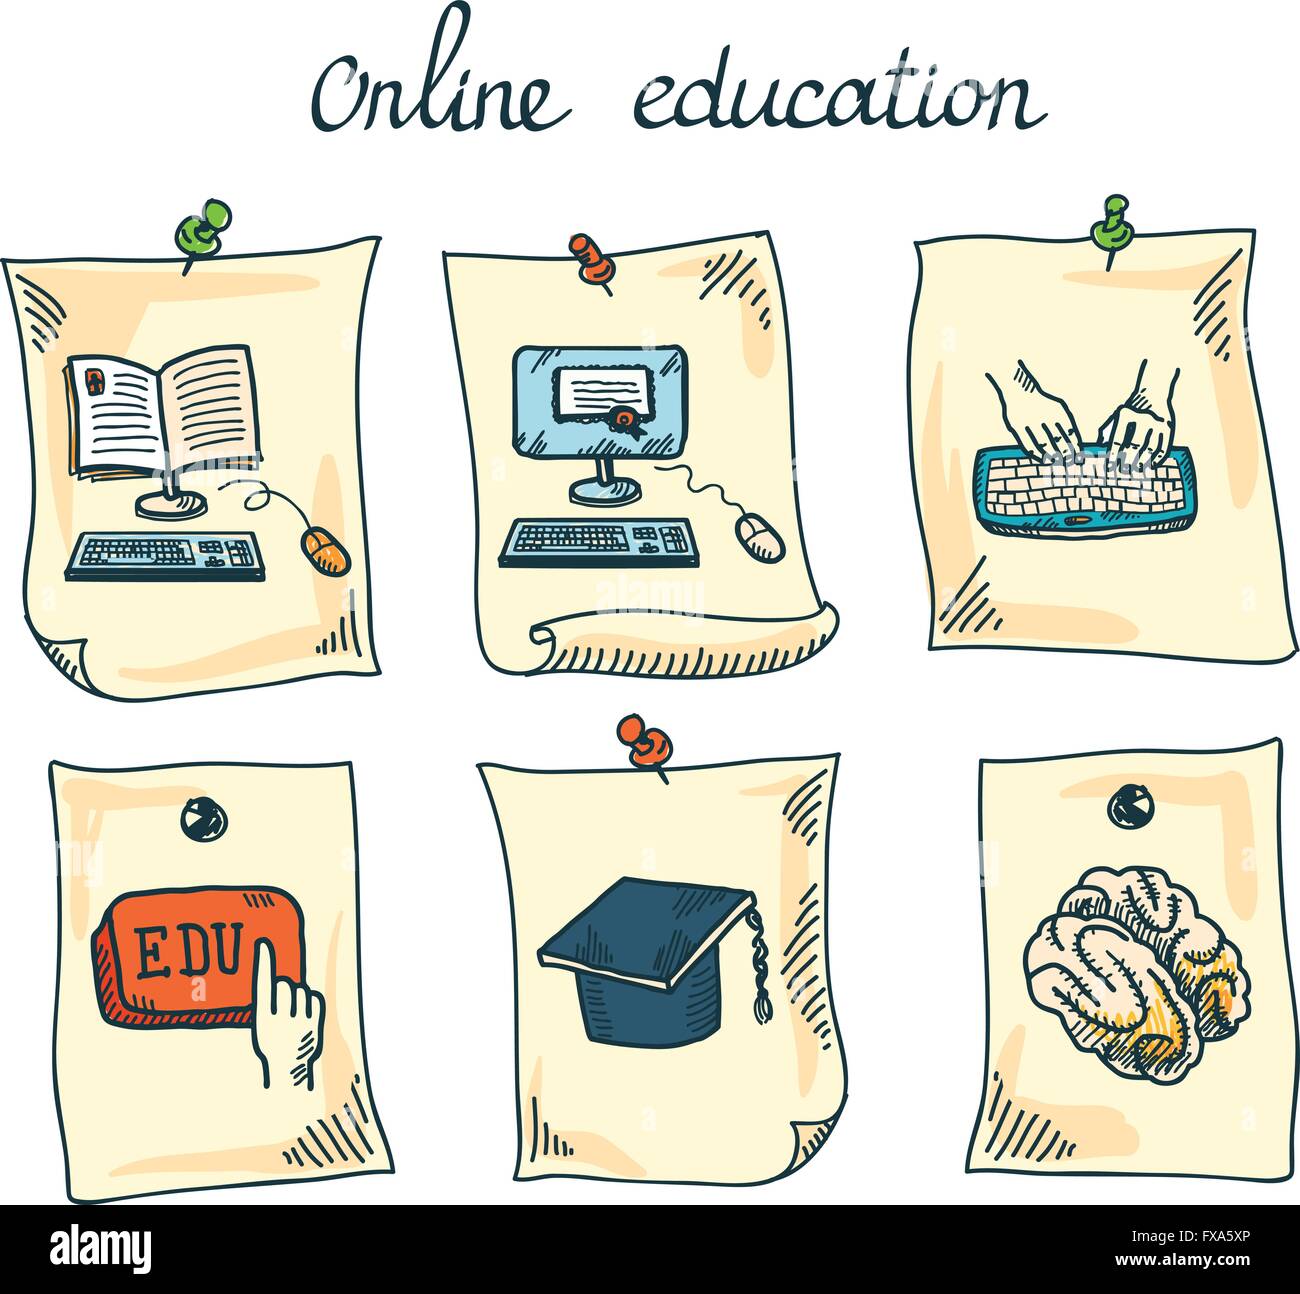 Online education sticker set Stock Vector